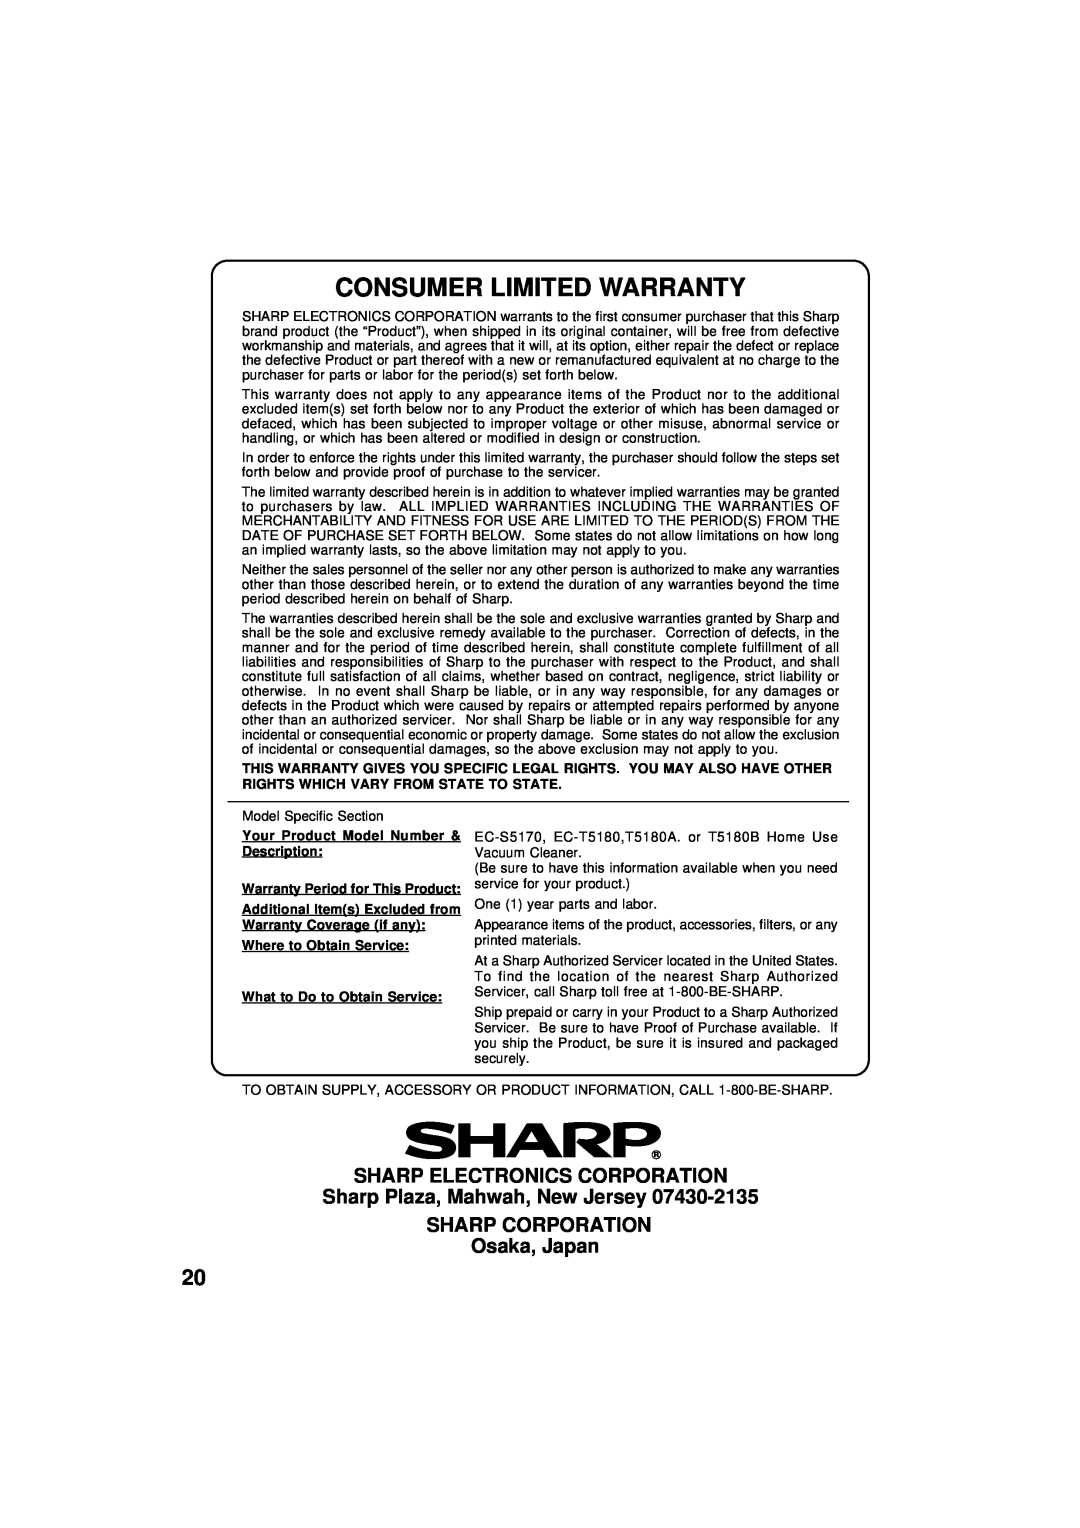 Sharp EC-T5180 Consumer Limited Warranty, Sharp Electronics Corporation, Sharp Plaza, Mahwah, New Jersey SHARP CORPORATION 